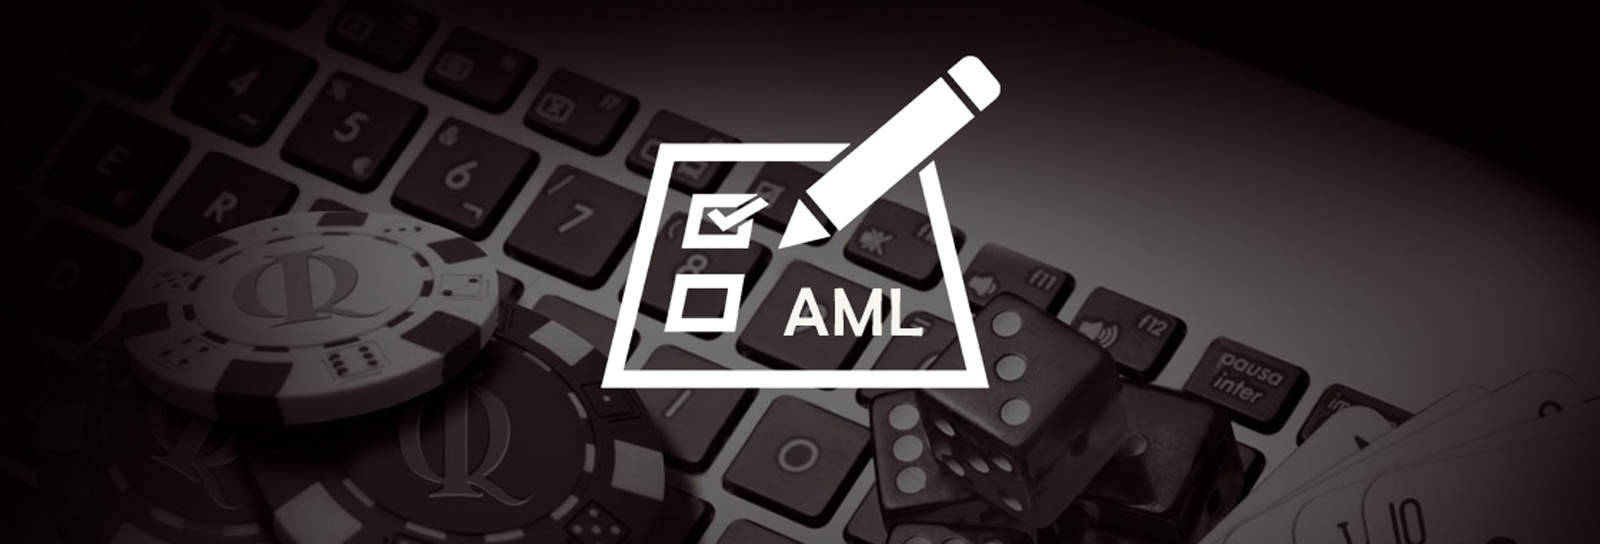 AML means anti money laundering